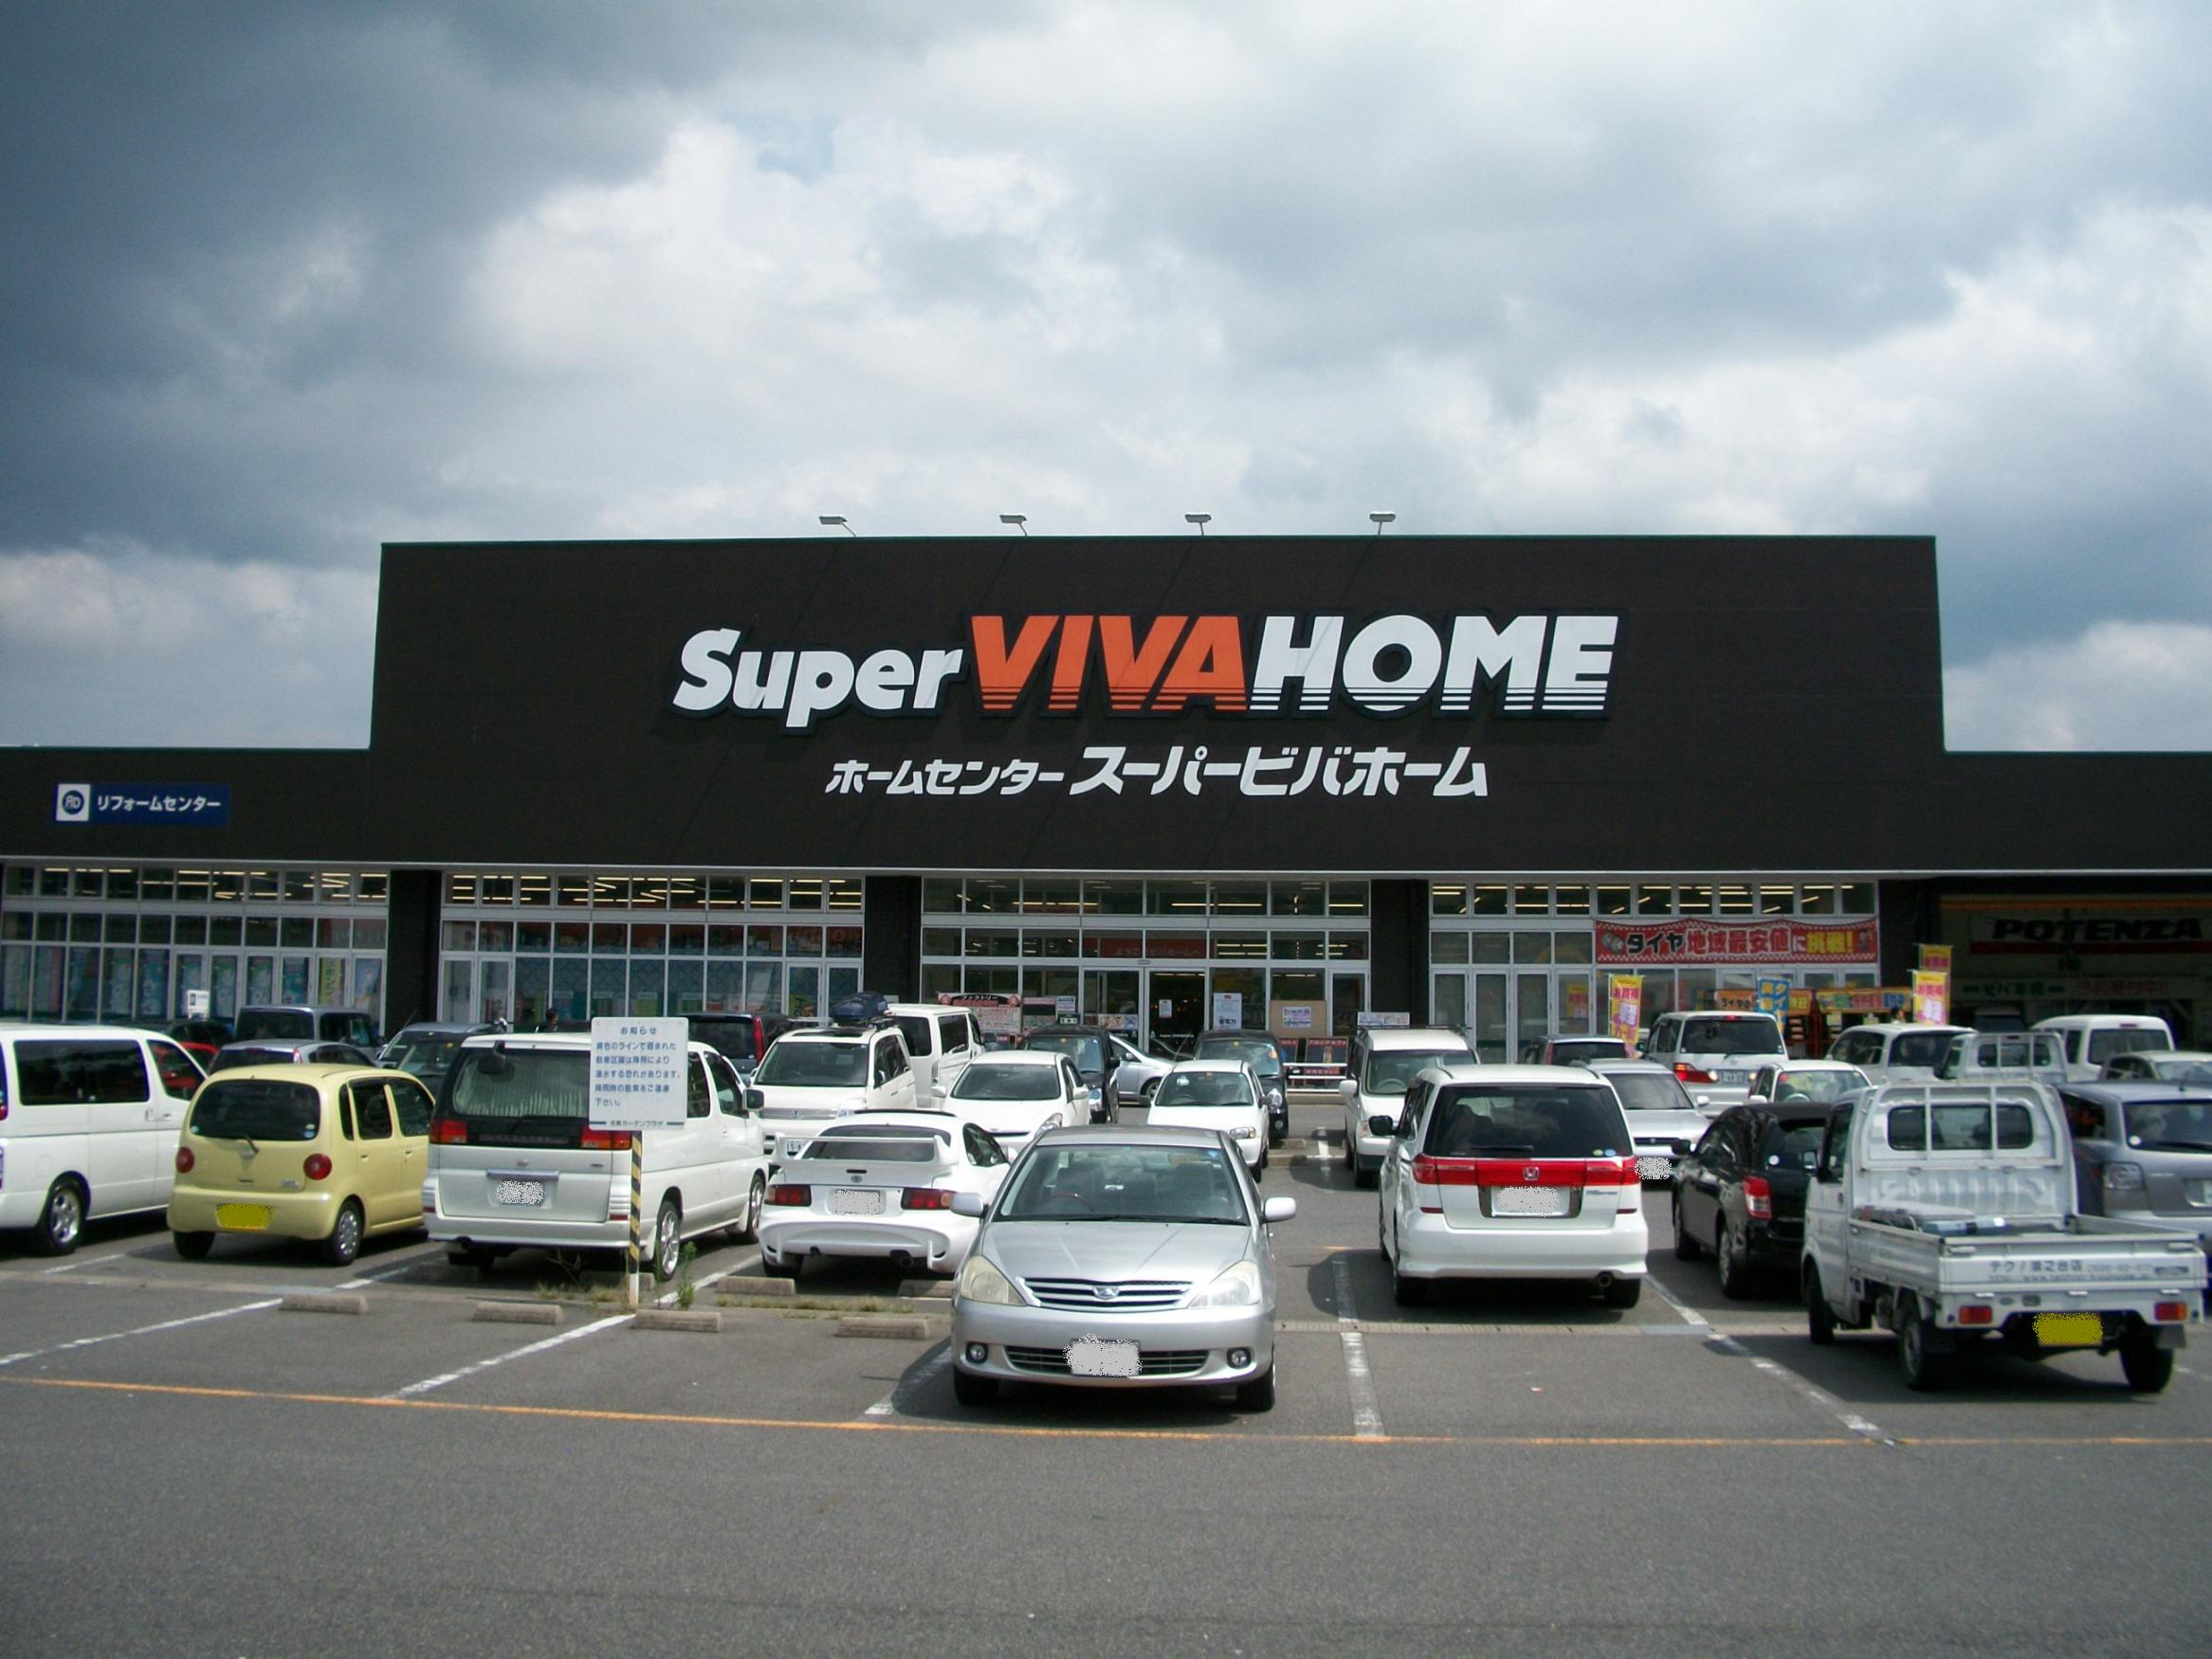 Home center. 1007m until the Super Viva Home Nabari store (hardware store)